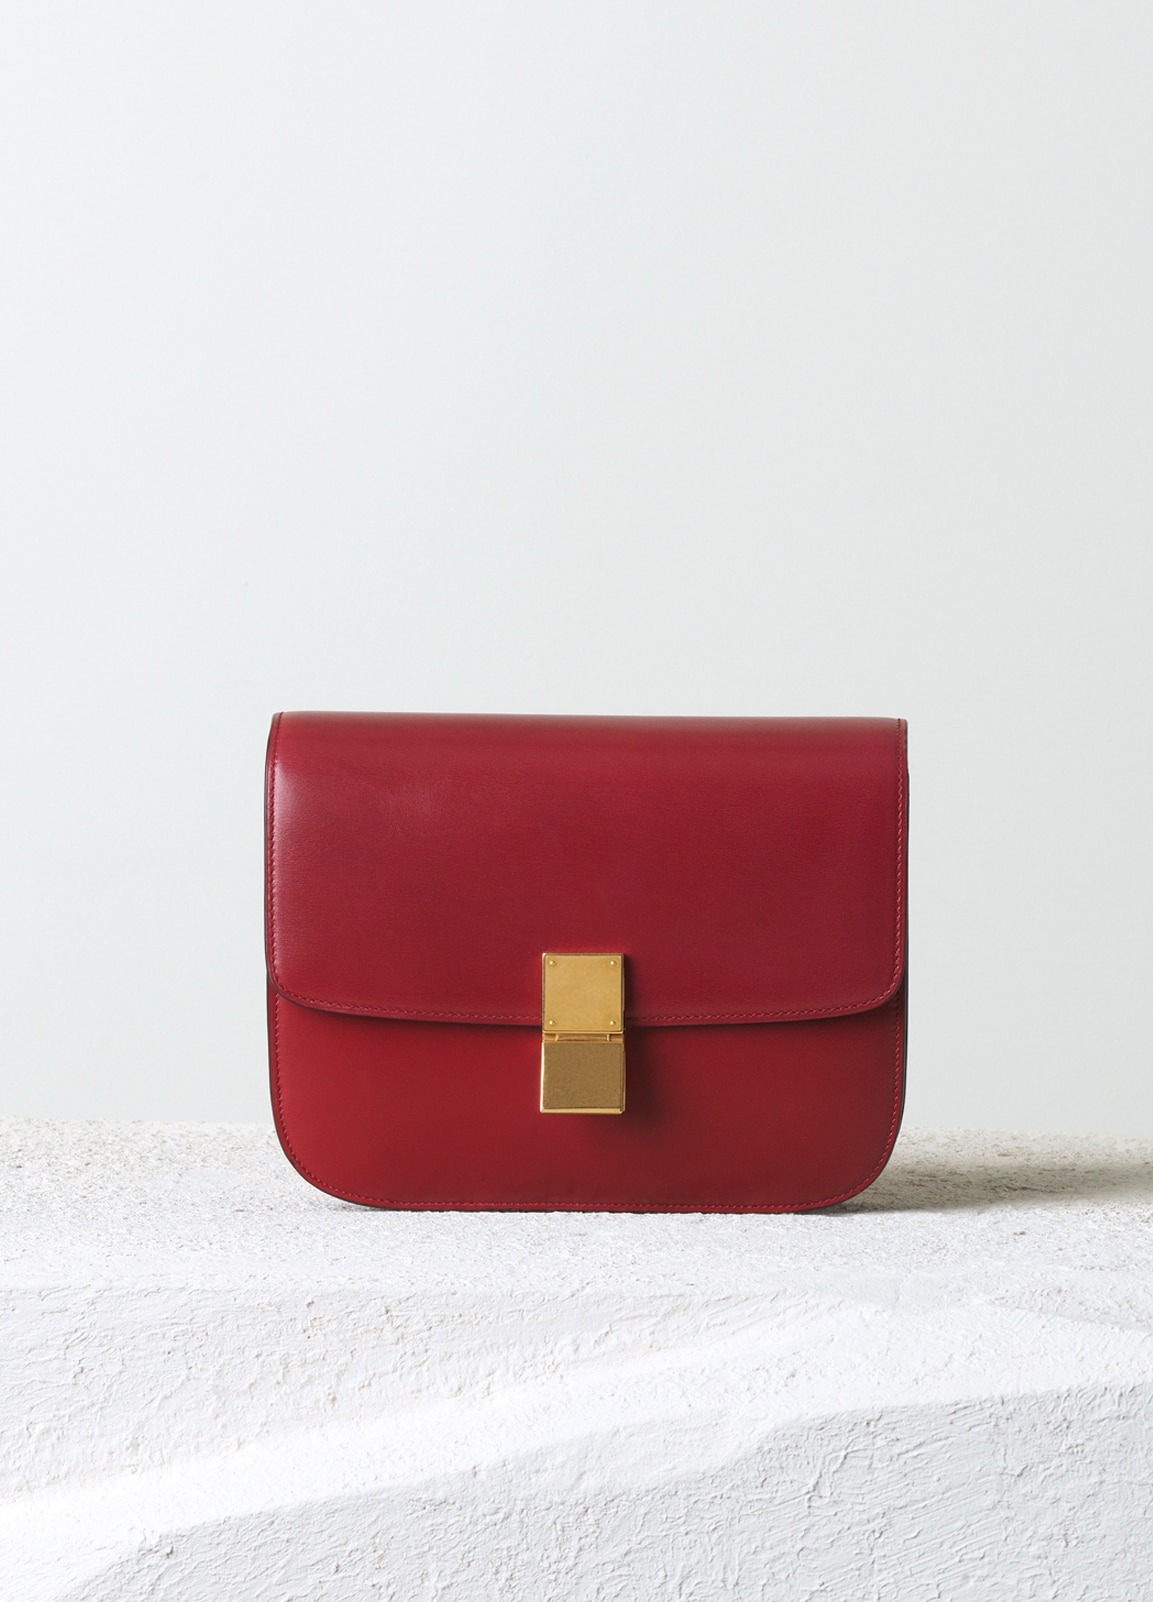 Celine-Red-Box-Calfskin-Classic-Box-Medium-Bag.jpg  